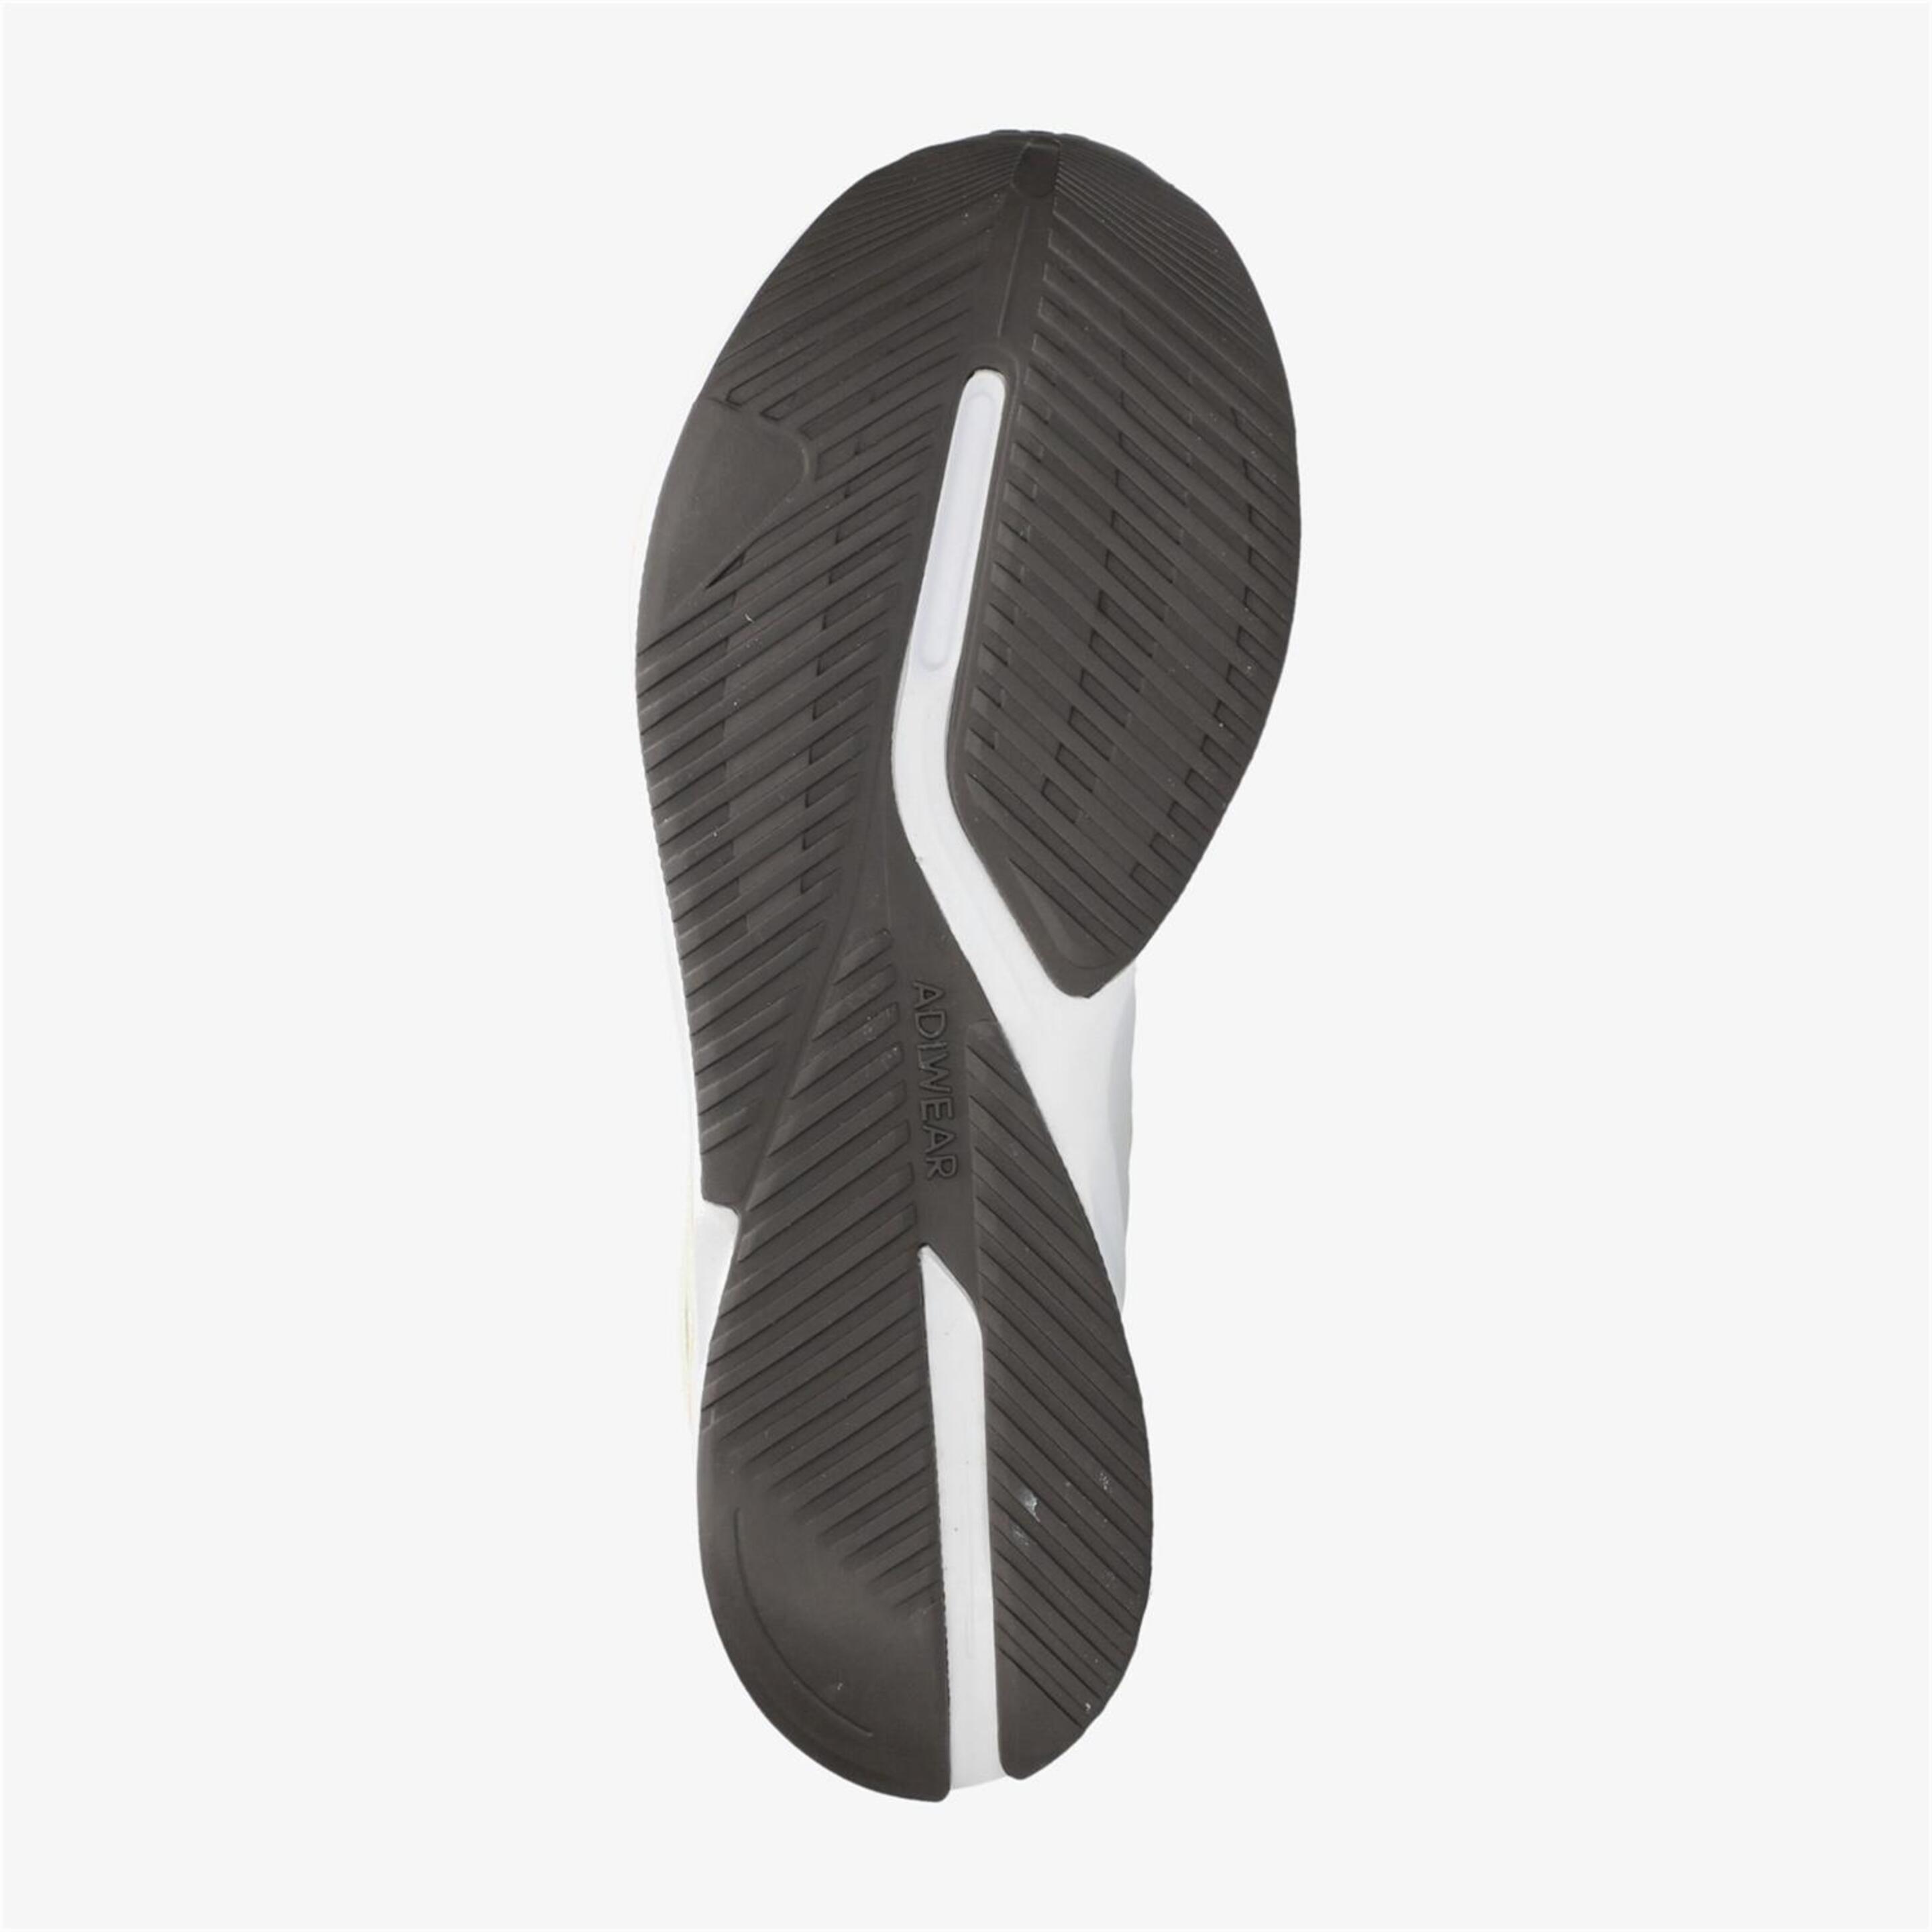 adidas Duramo SL - Blanco - Zapatillas Running Hombre  | Sprinter